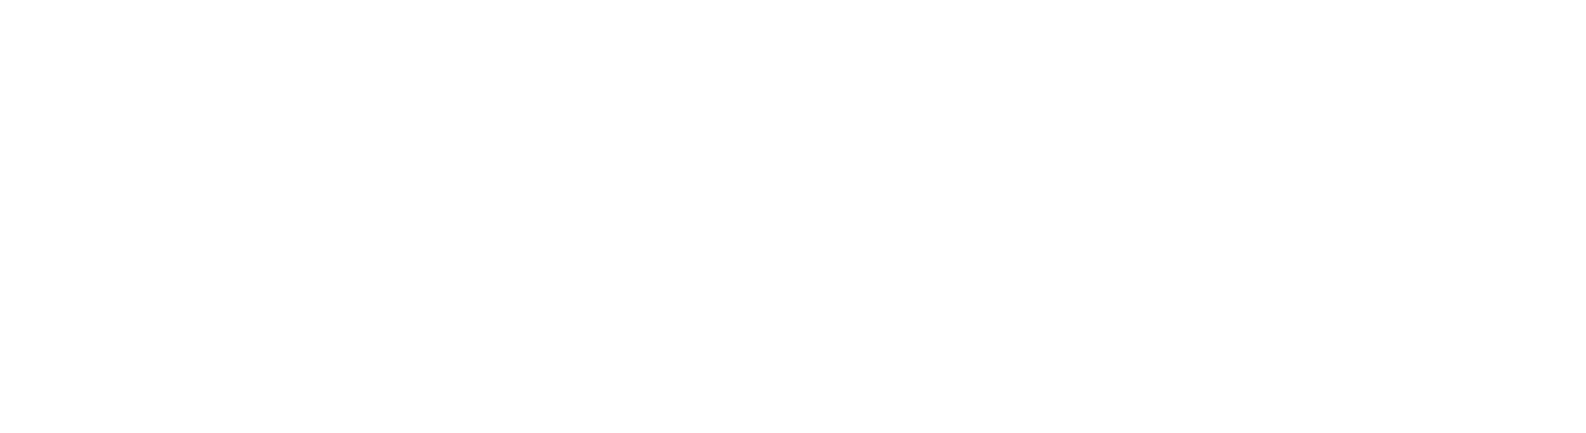 Eaton logo large for dark backgrounds (transparent PNG)